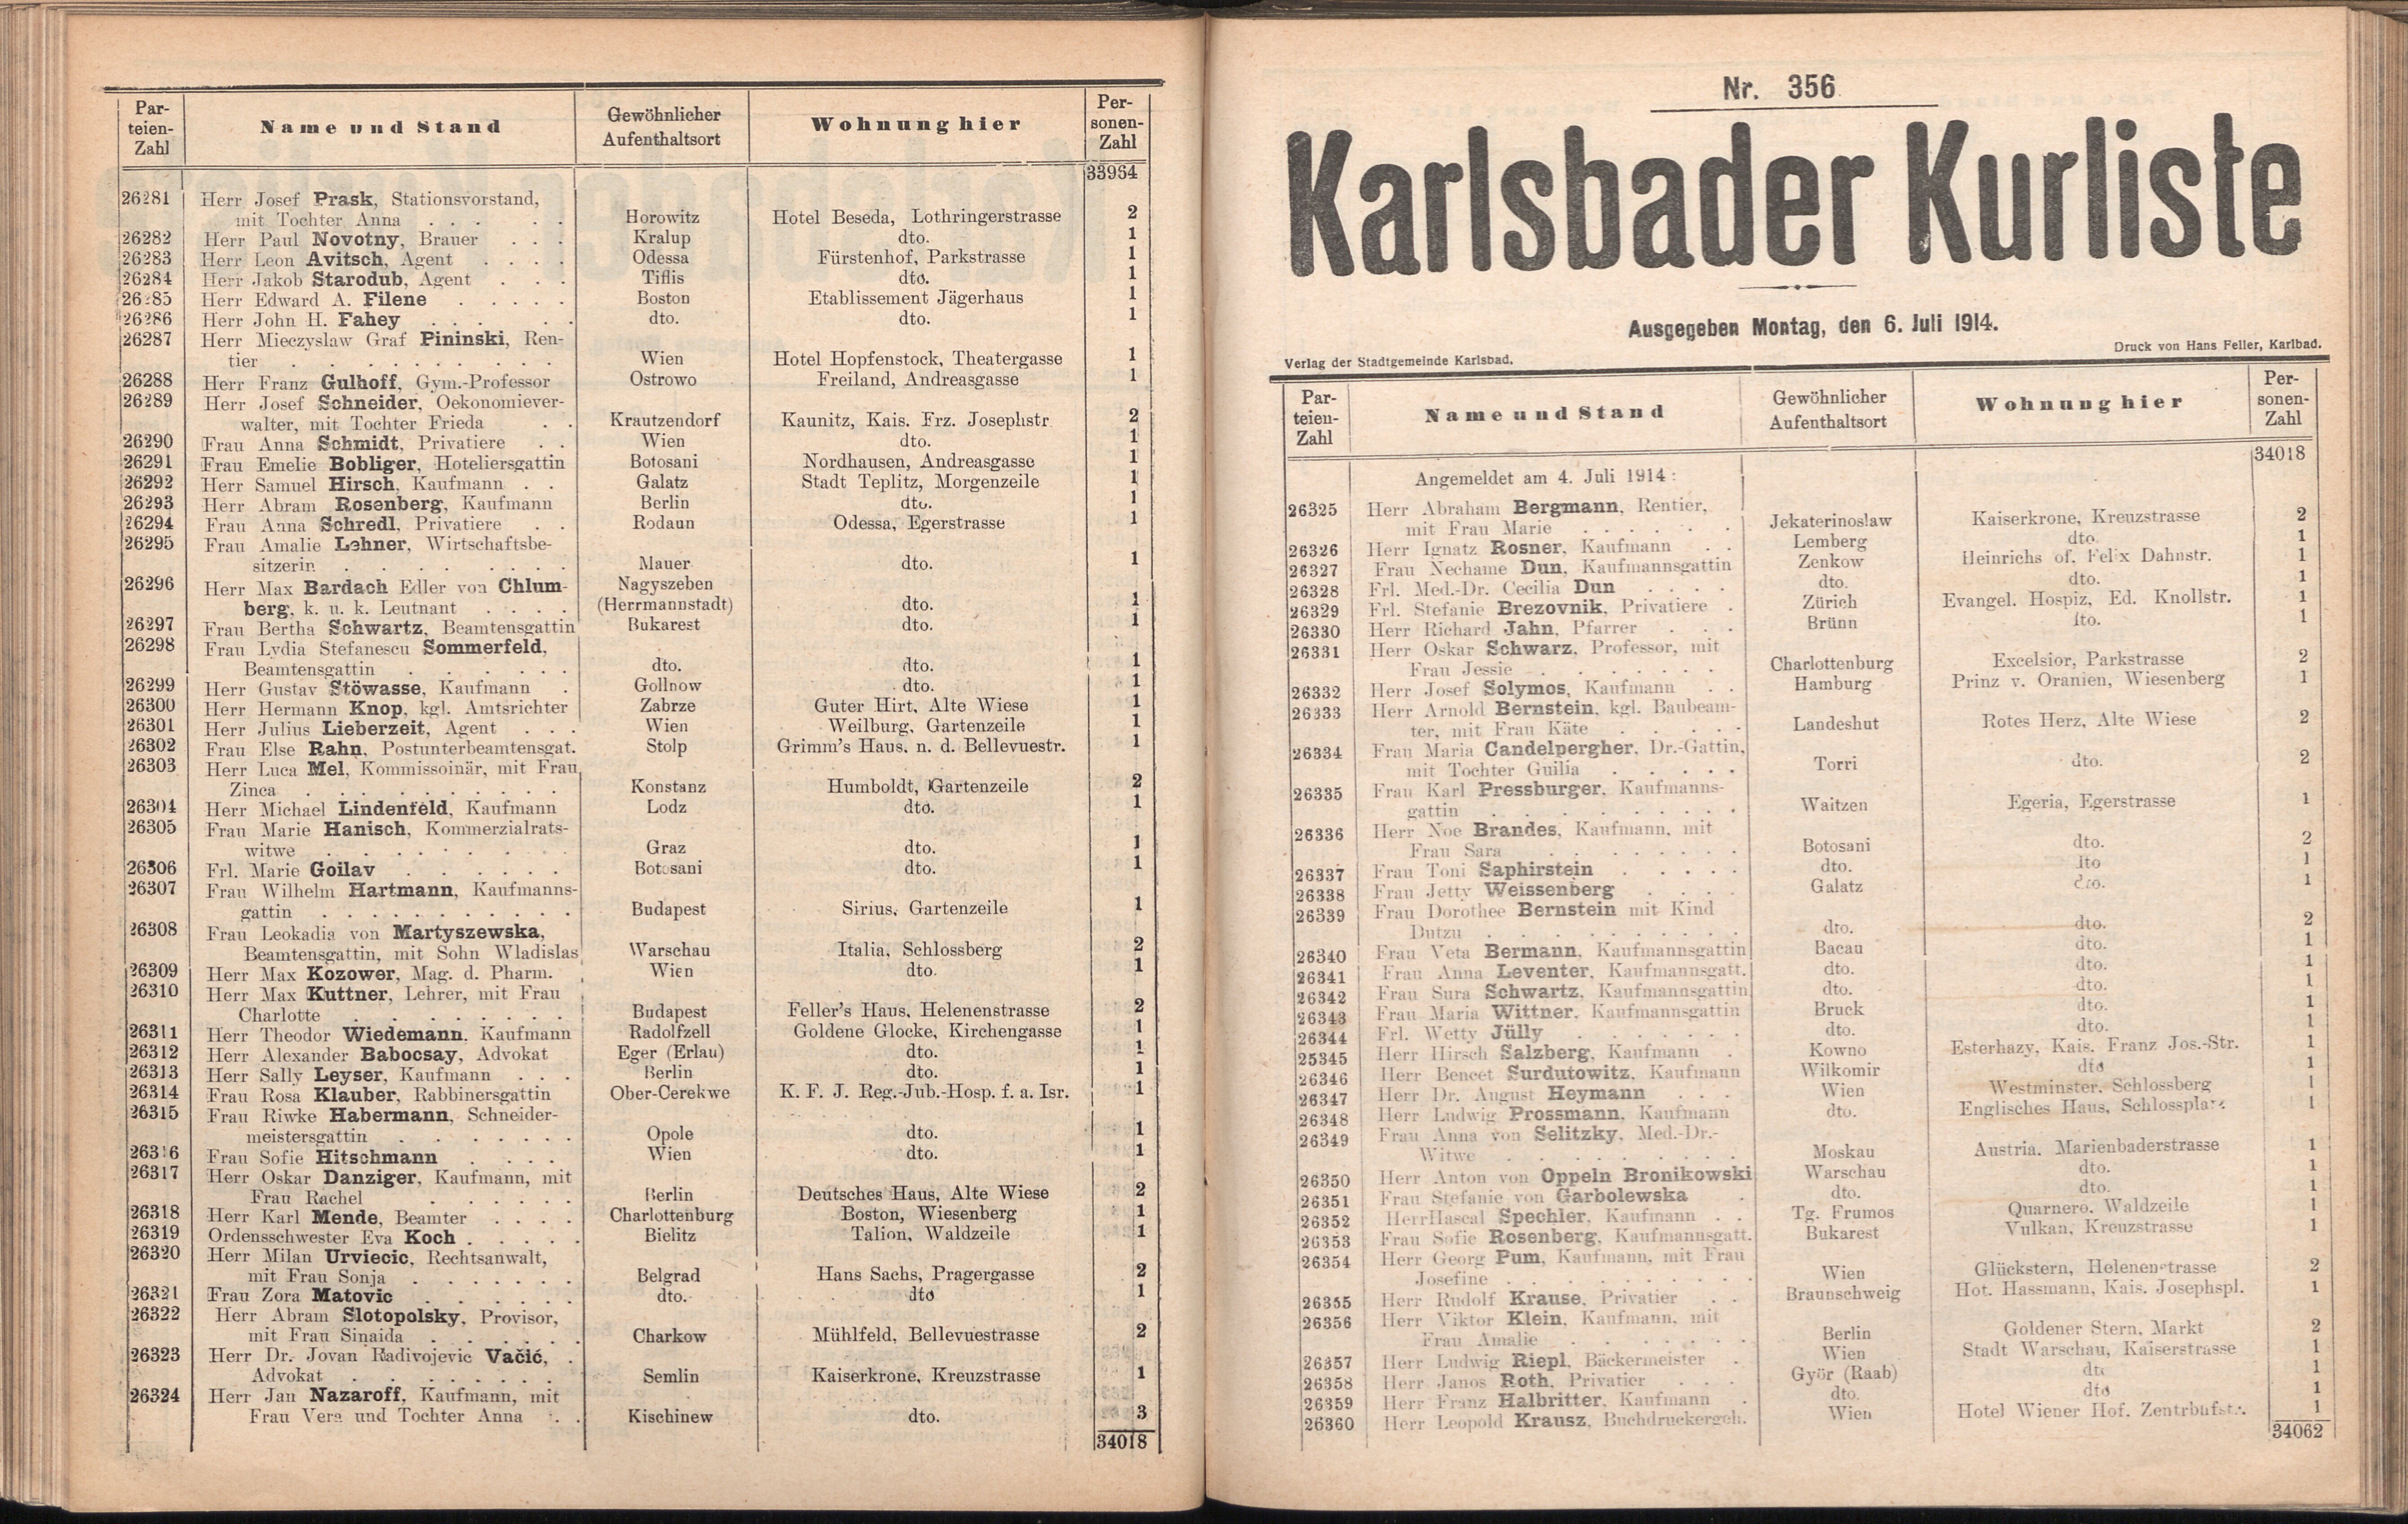 442. soap-kv_knihovna_karlsbader-kurliste-1914_4420